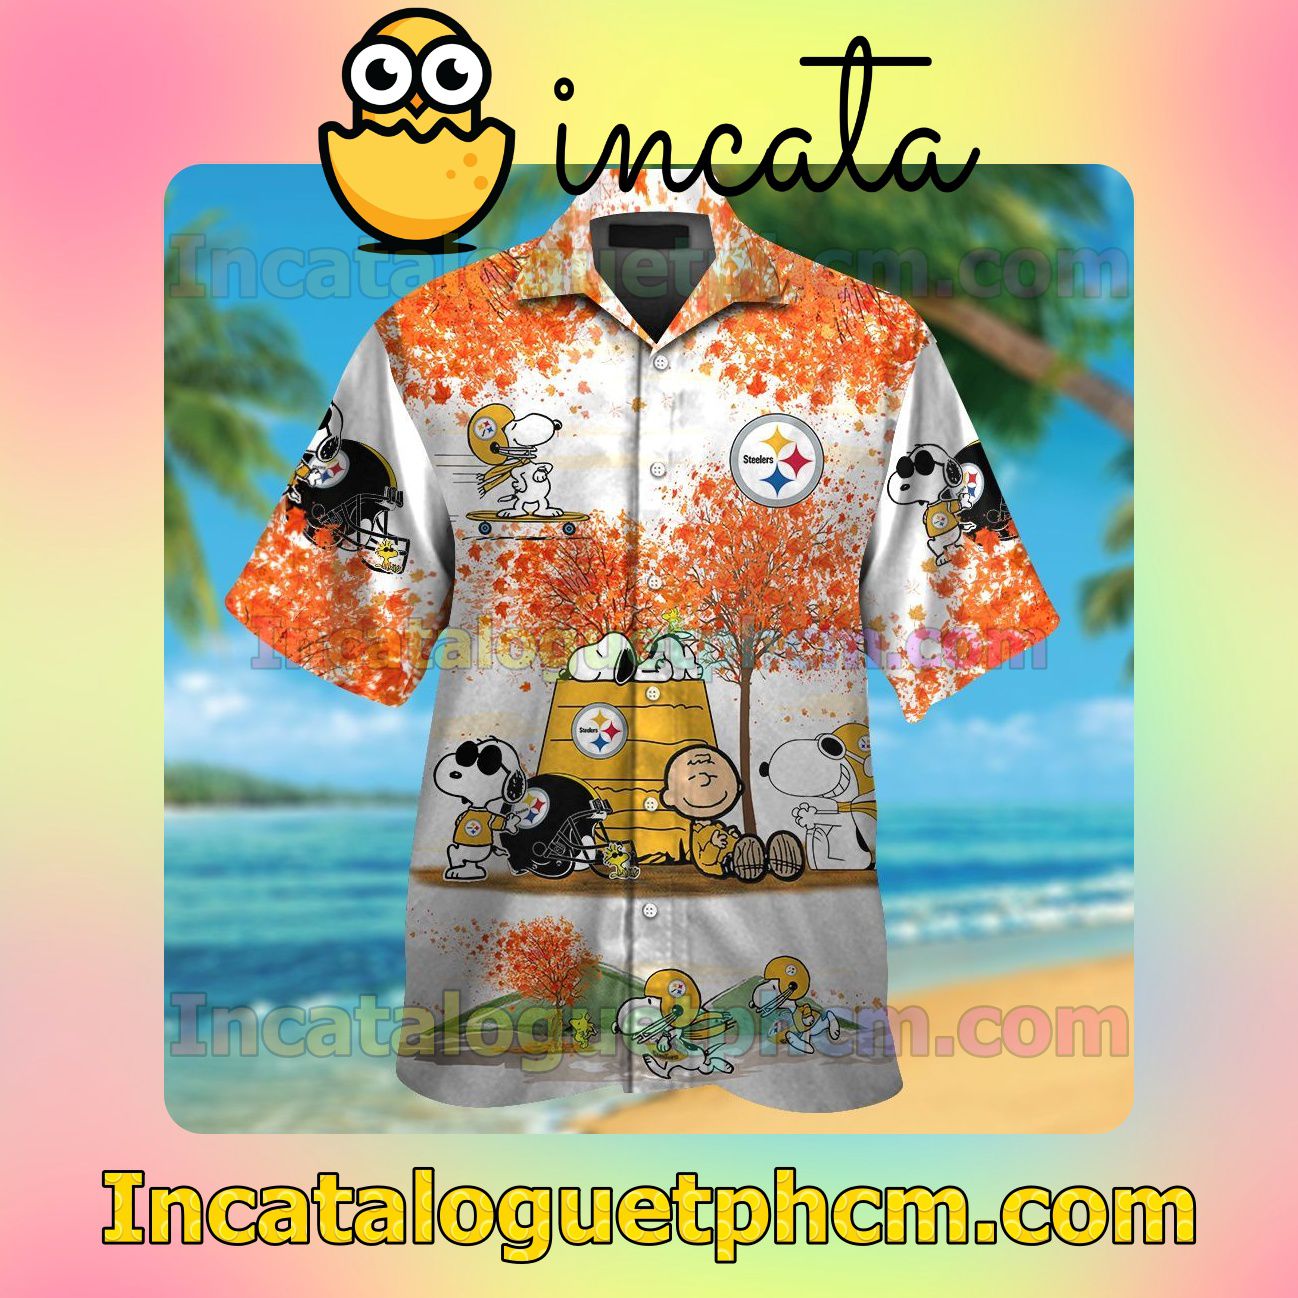 Pittsburgh Steelers Snoopy Autumn Beach Vacation Shirt, Swim Shorts